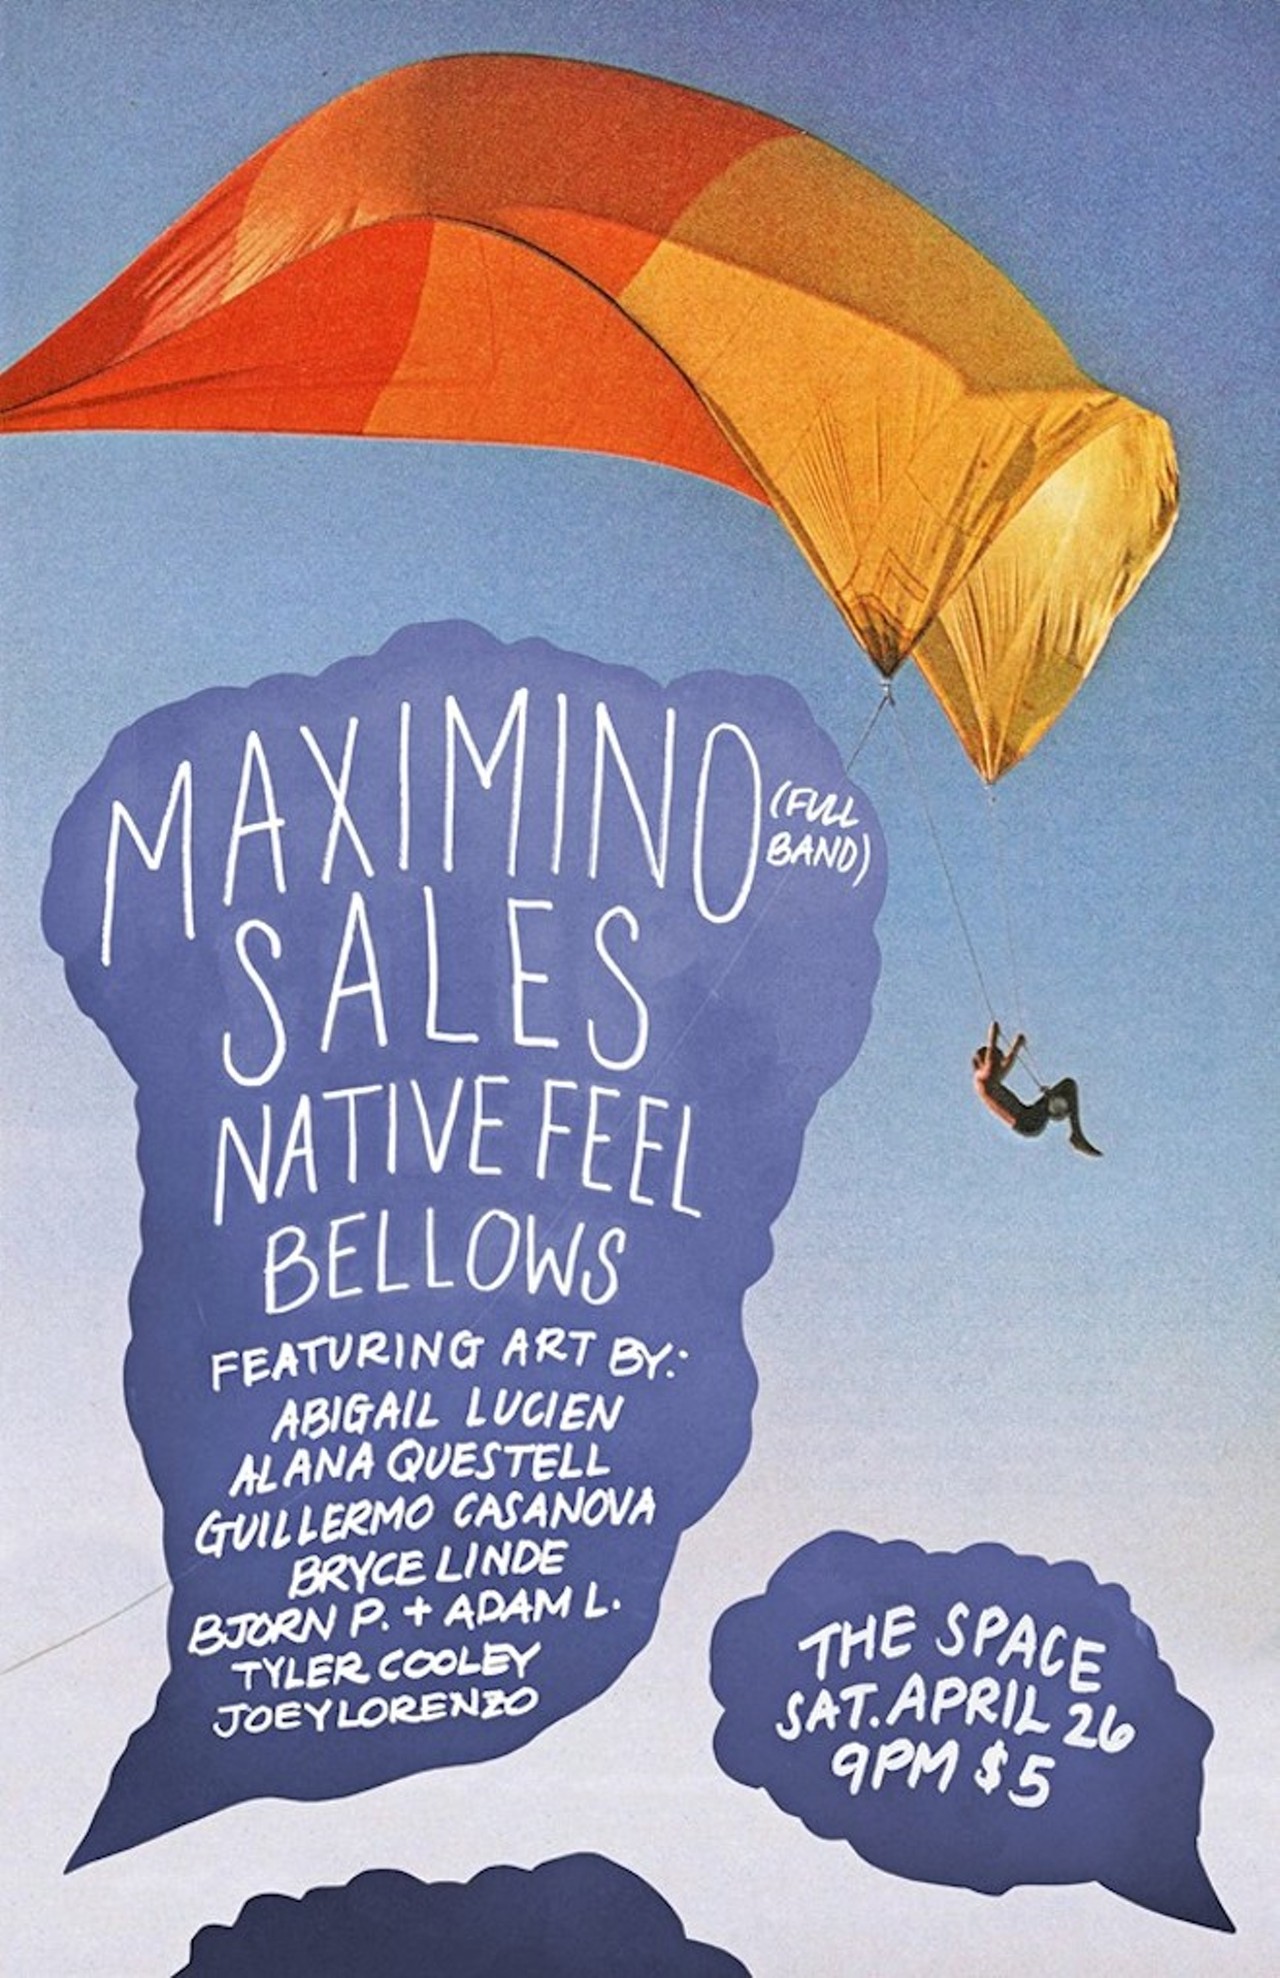 Saturday, April 26Maximino (Full band)with Sales, Native Feel, Bellows.